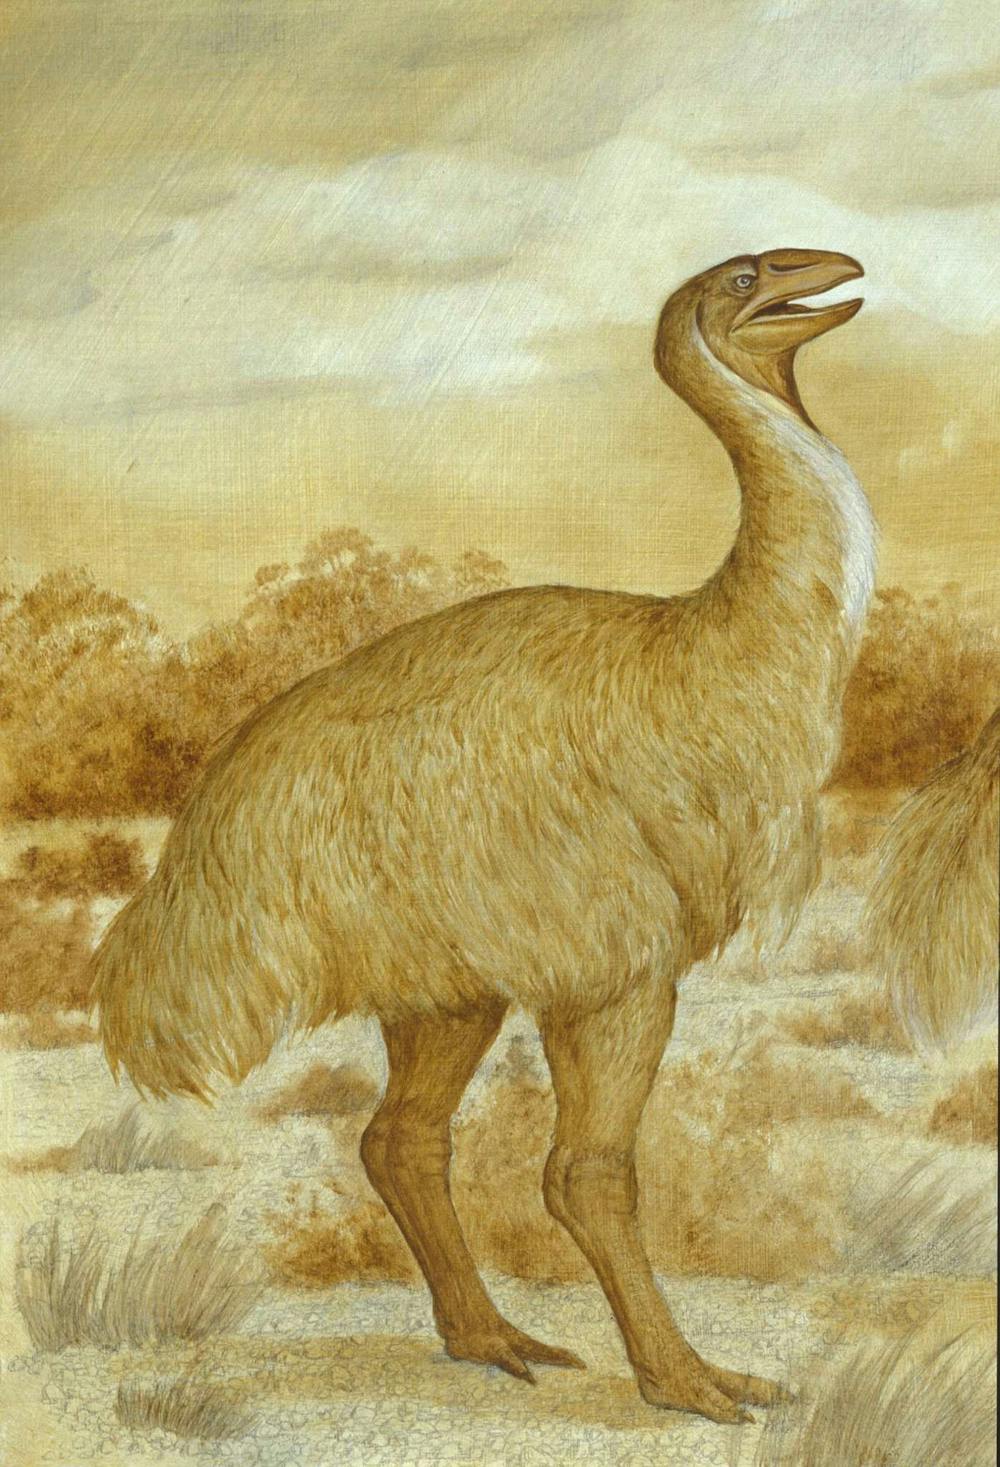 A mistaken identity for Australia's extinct big bird